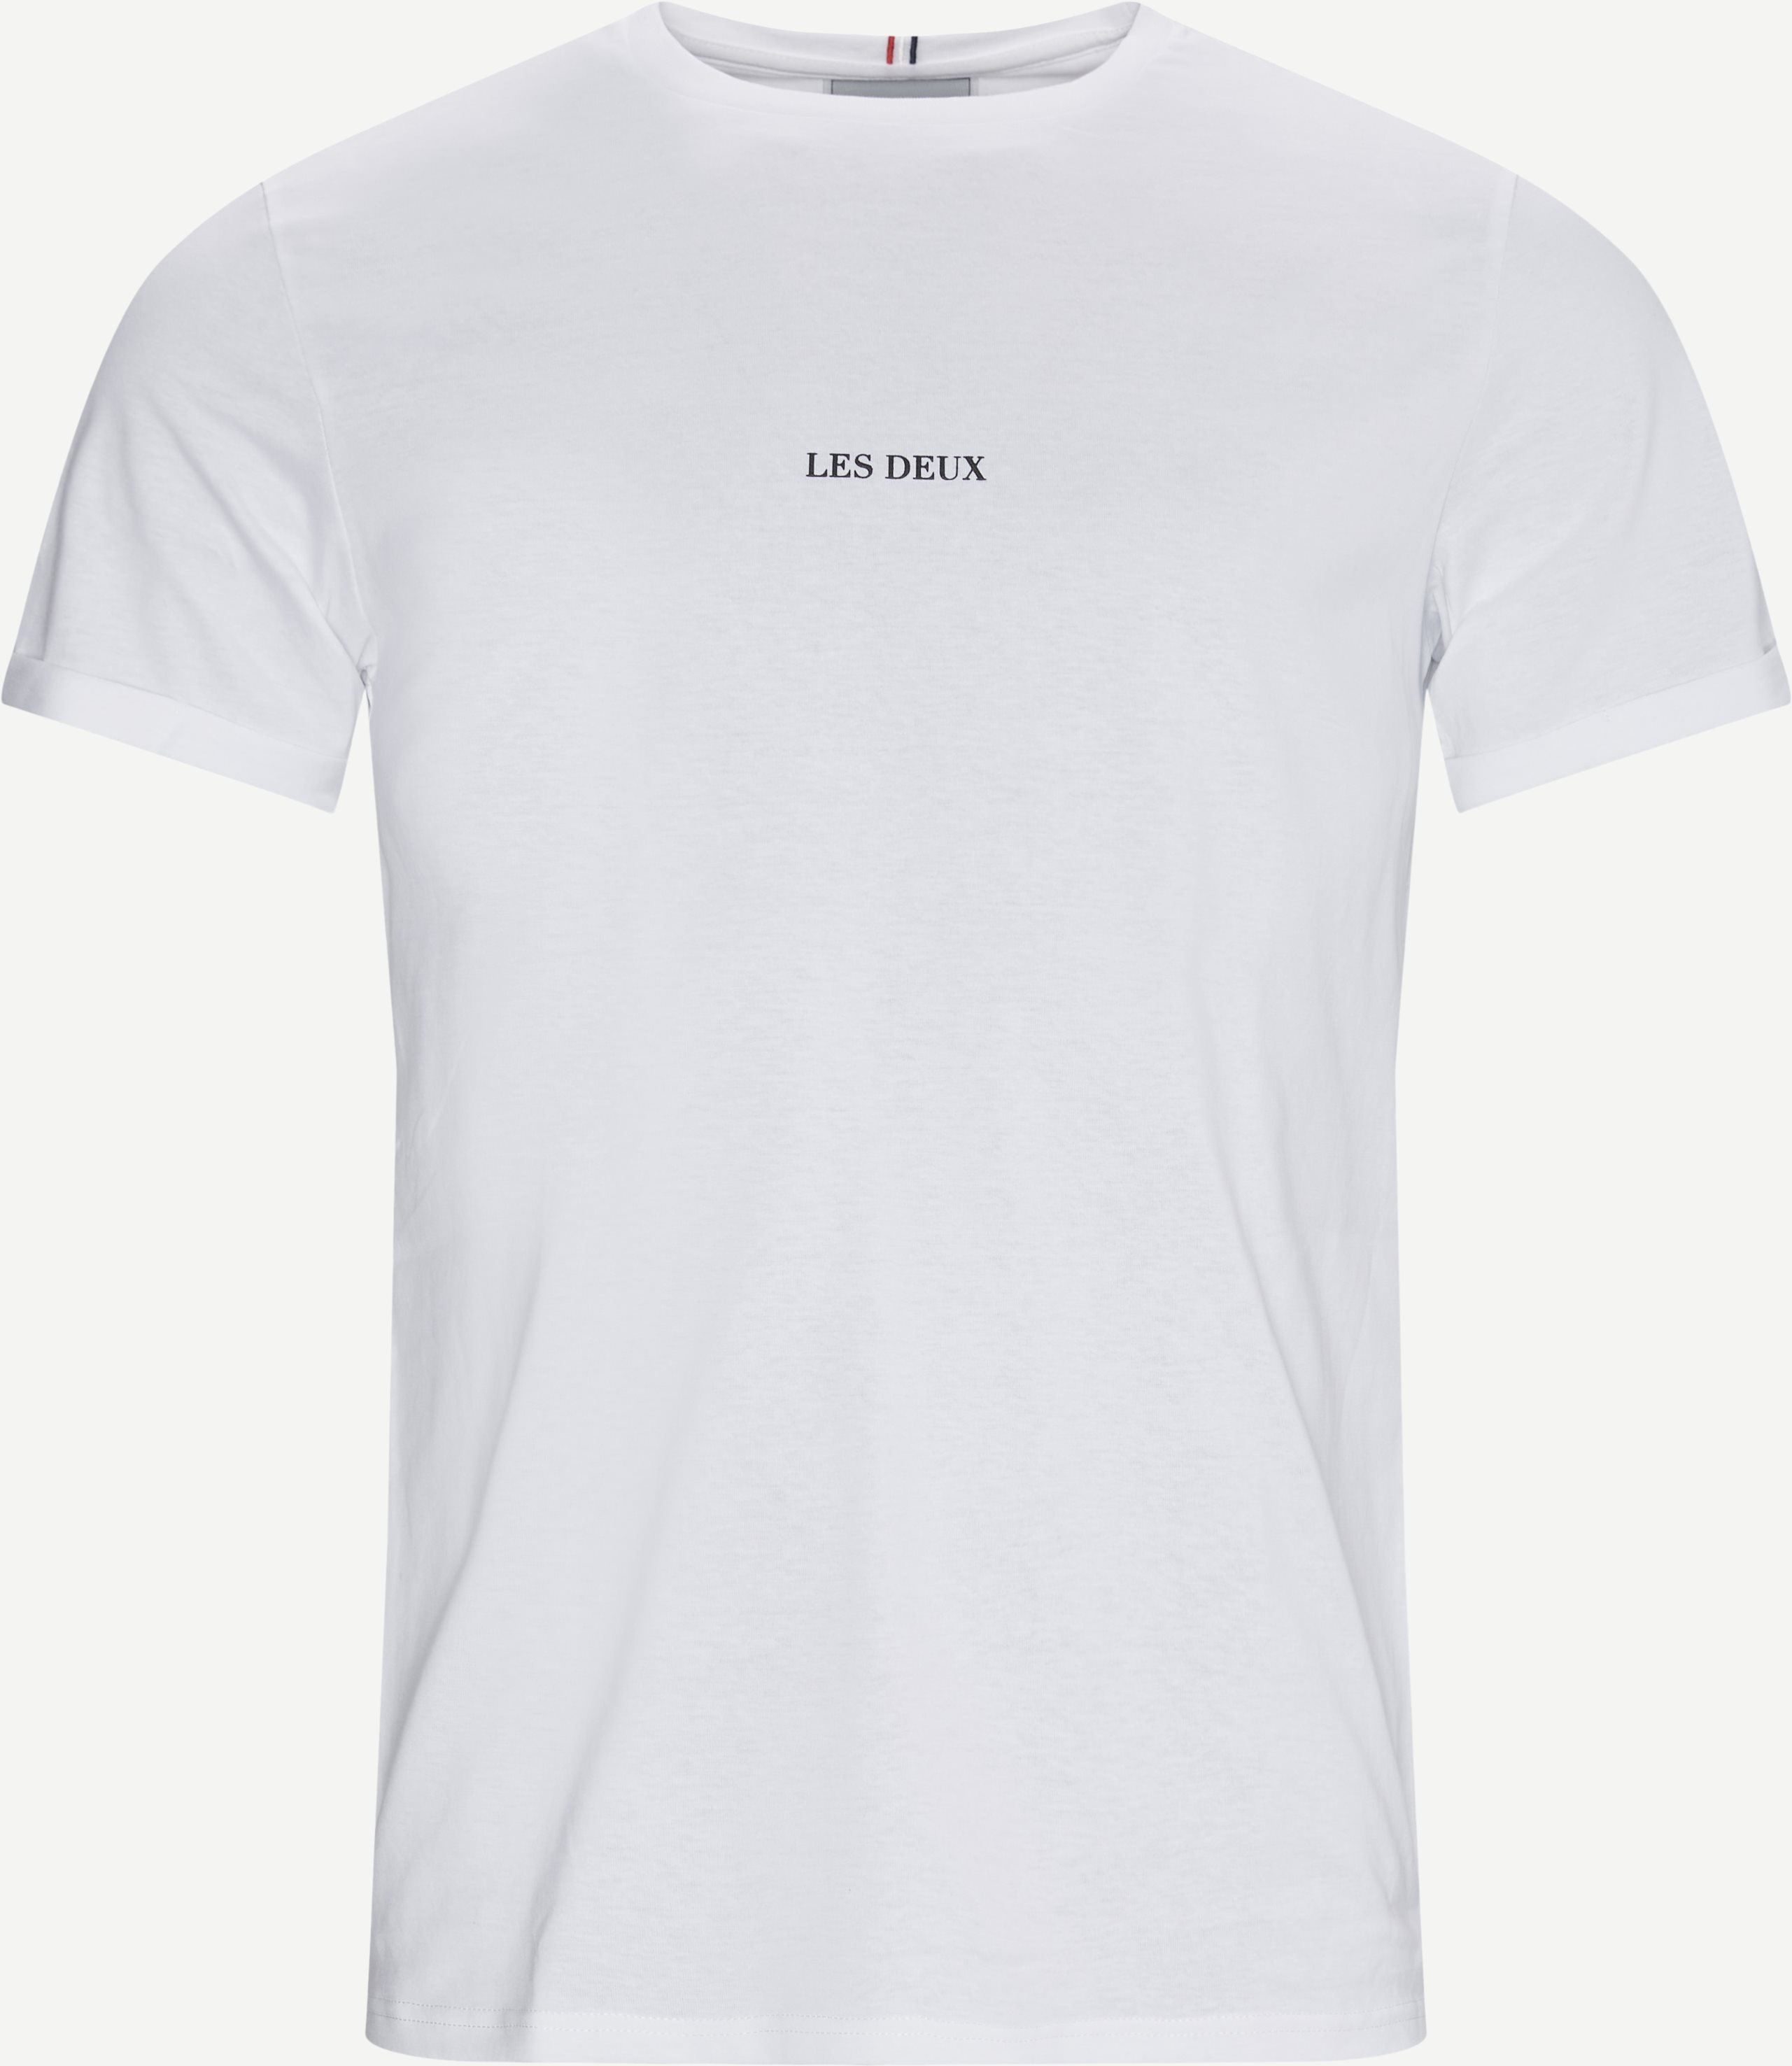 Lens T-shirt - T-shirts - Regular fit - White